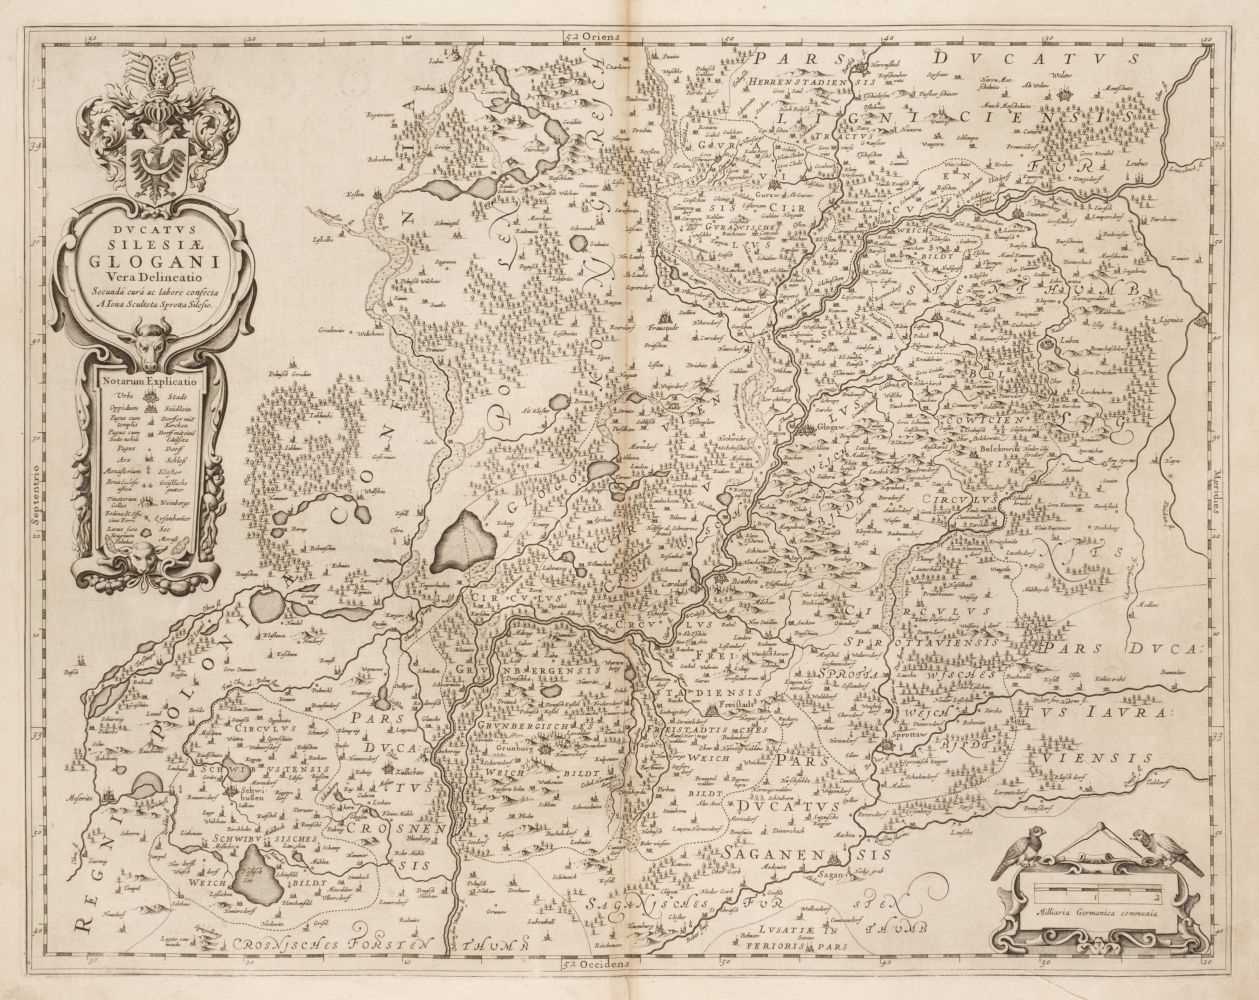 Lot 44 - Poland/Silesia. Blaeu (Johannes), Ducatus Silesiae Glogani vera Delineatio, circa 1640